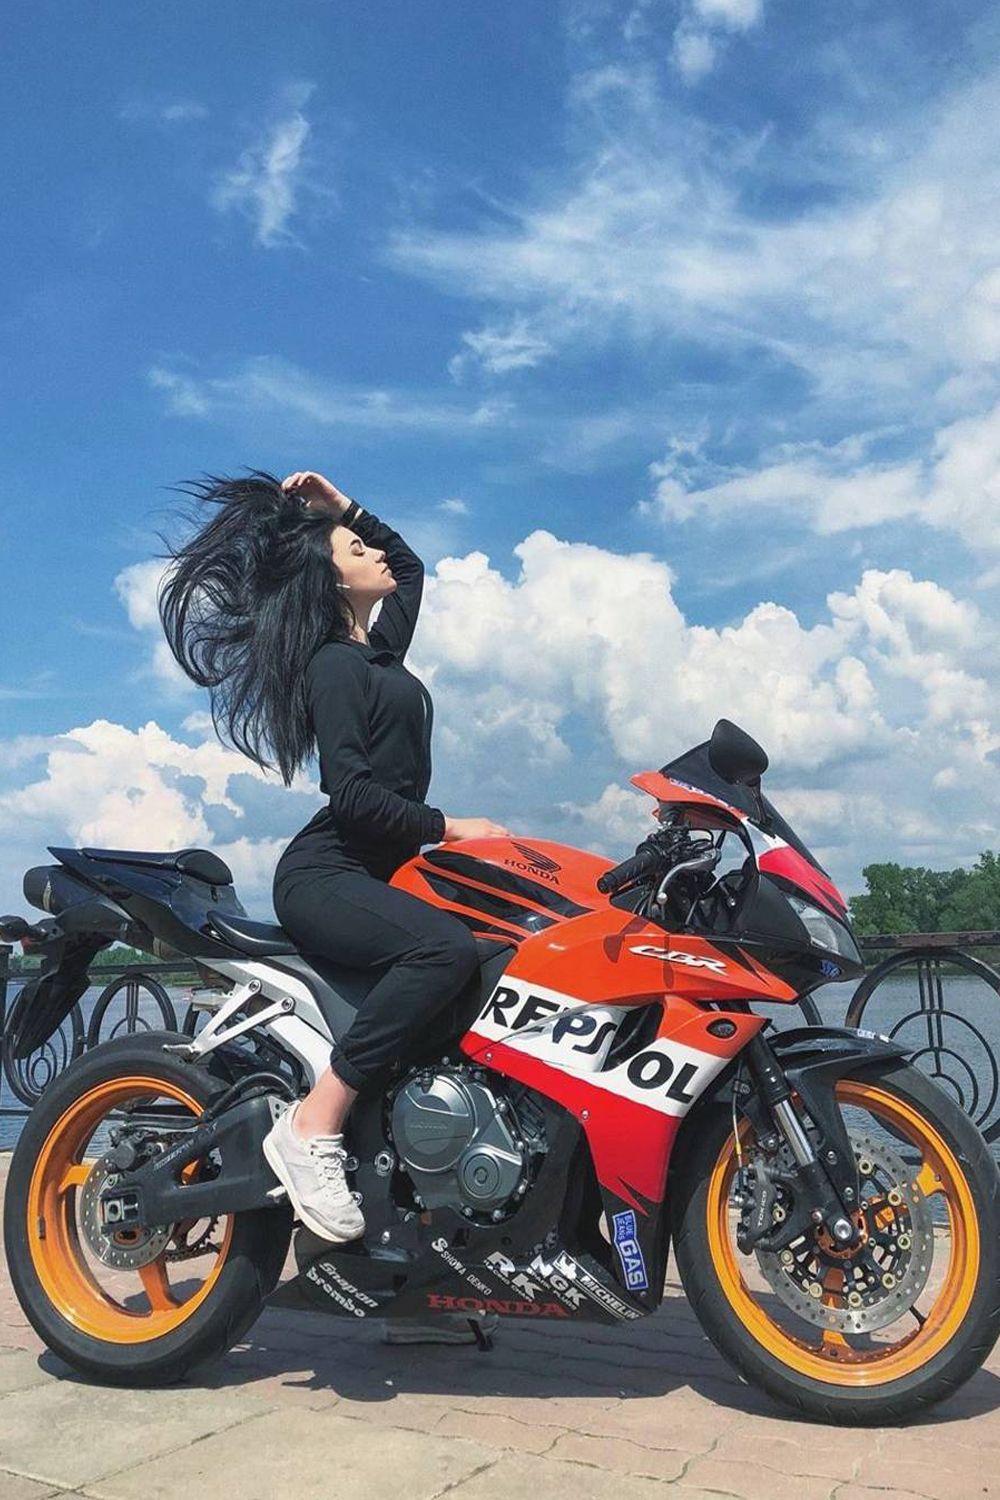 Wallpaper aesthetic wallpaper Wallpaper. Girl motorcyclist, Female motorcycle riders, Bike photohoot